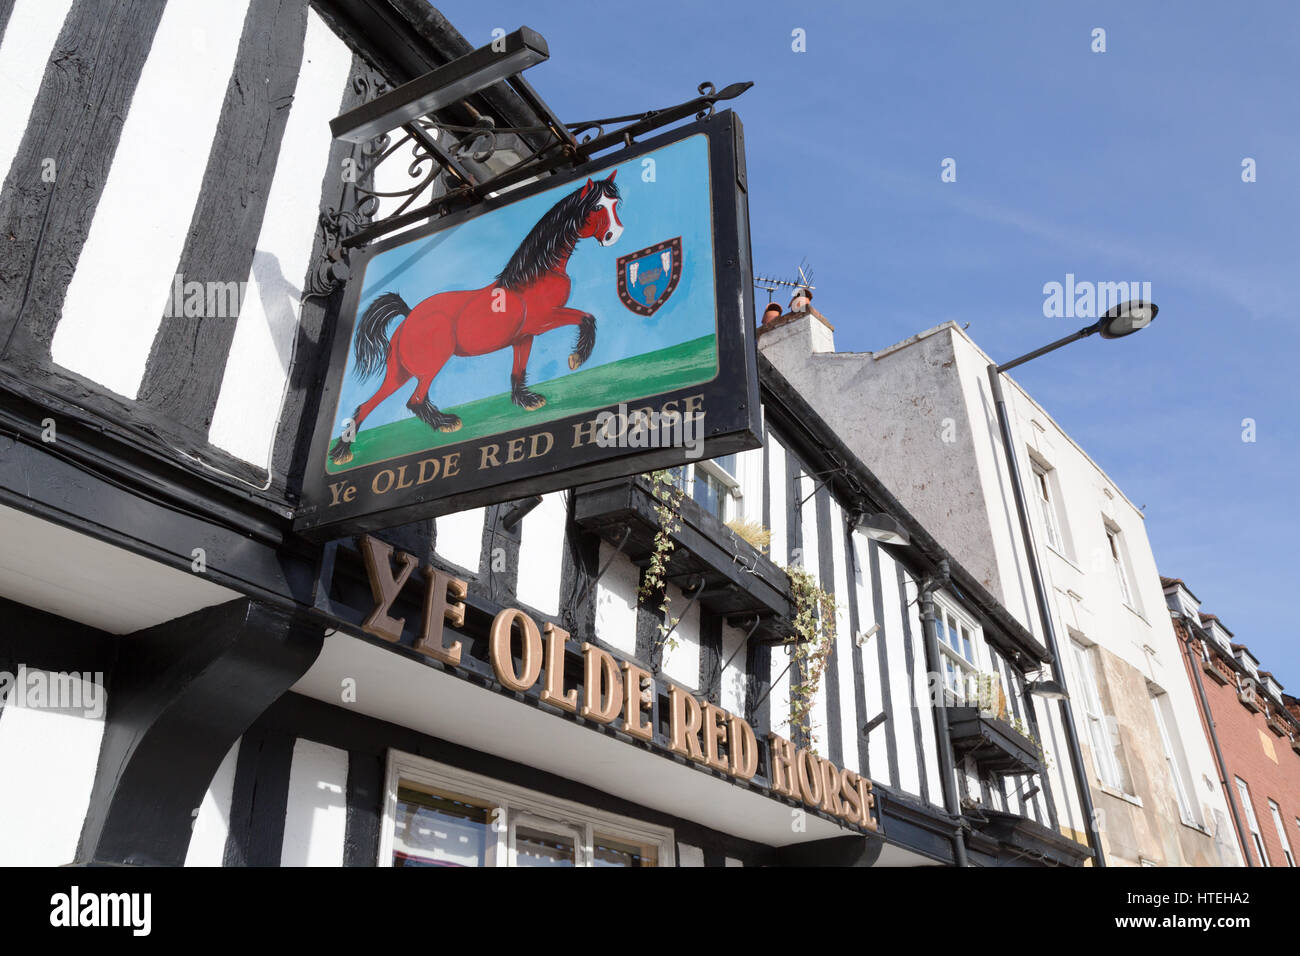 Pub sign - Ye Olde Red Horse Inn, a medieval pub, Evesham, Worcestershire England UK Stock Photo